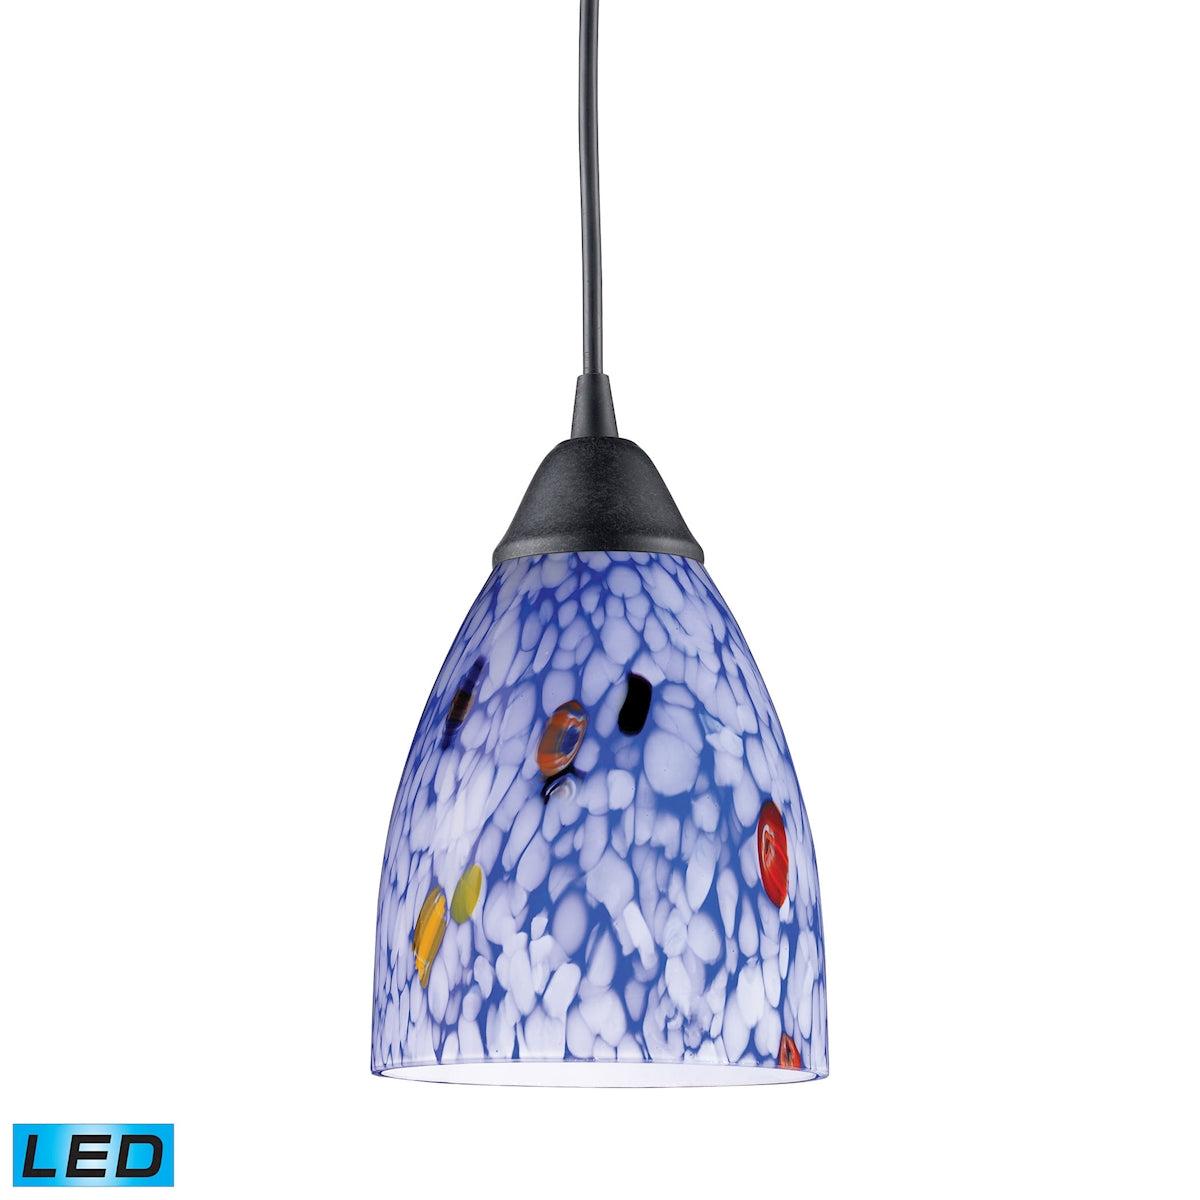 ELK Lighting 406-1BL-LED Classico 1-Light Mini Pendant in Dark Rust with Starburst Blue Glass - Includes LED Bulb